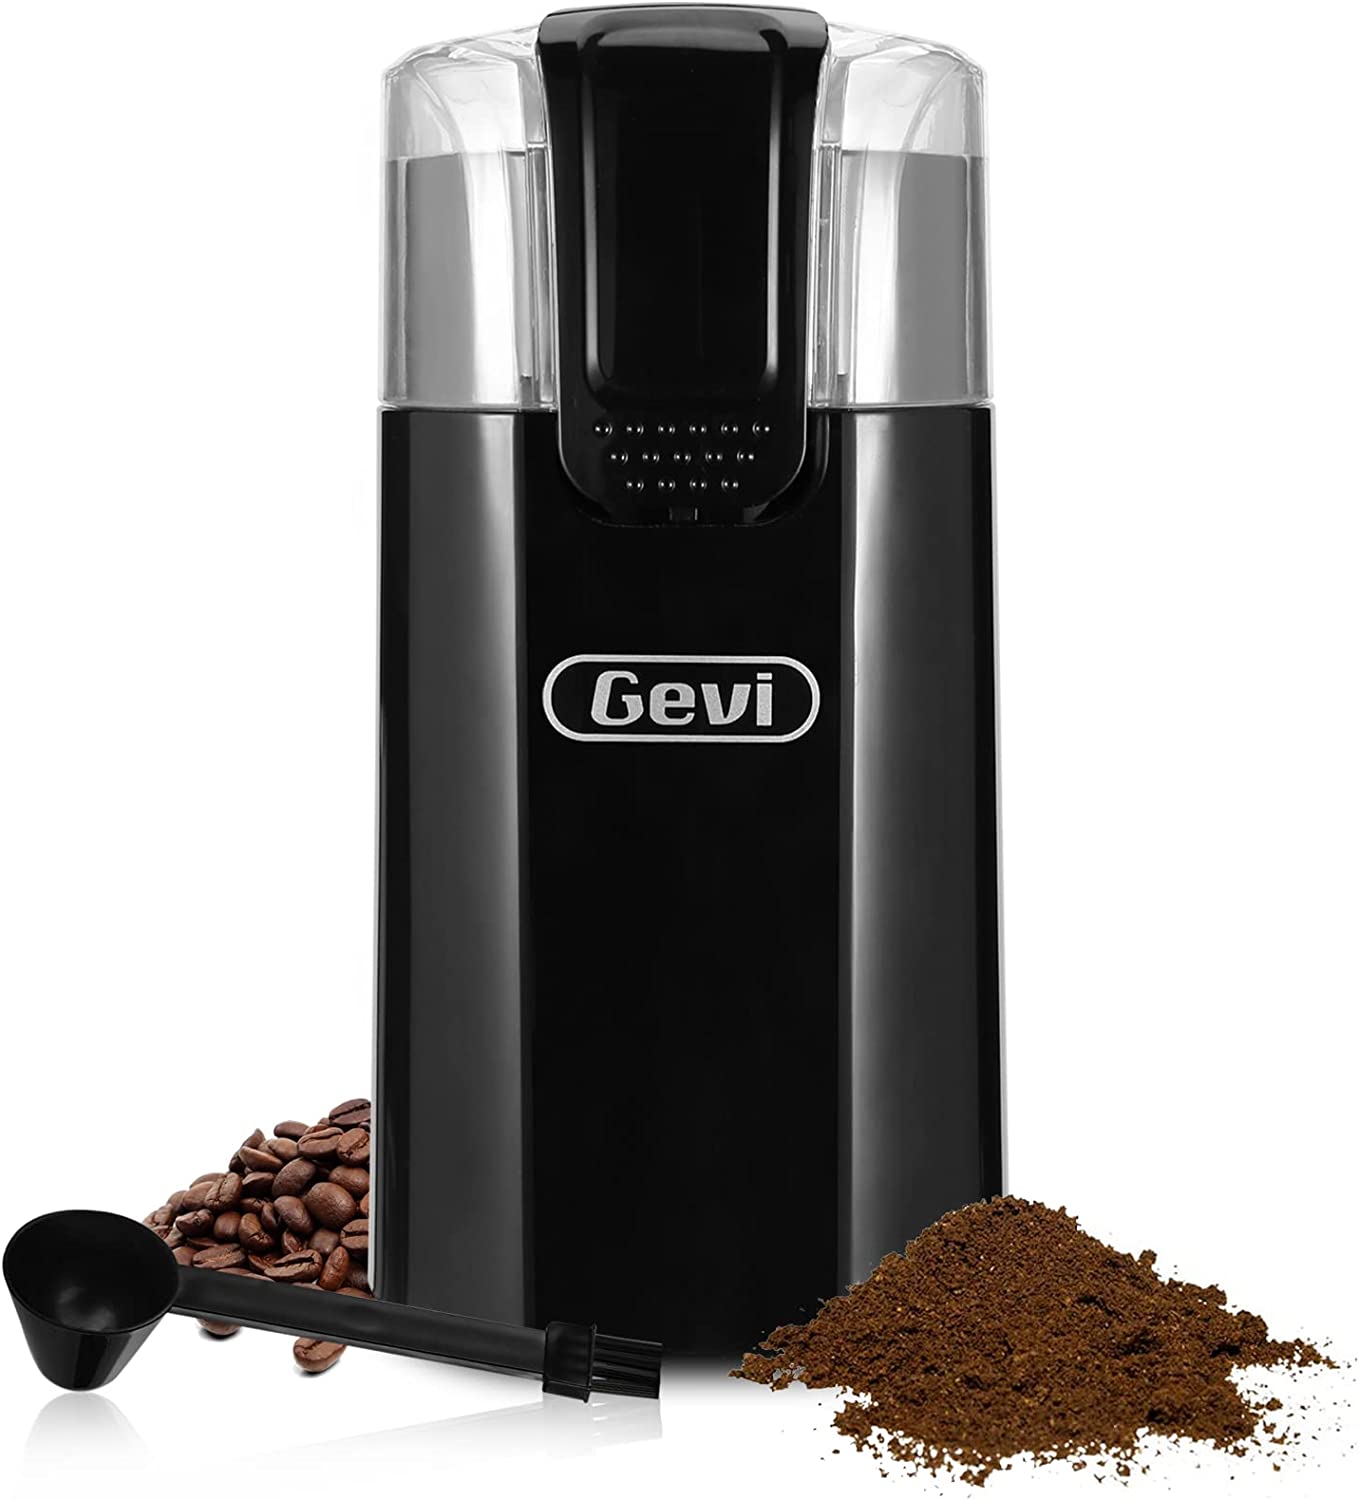 https://www.dontwasteyourmoney.com/wp-content/uploads/2021/06/gevi-noiseless-electric-coffee-grinder.jpg